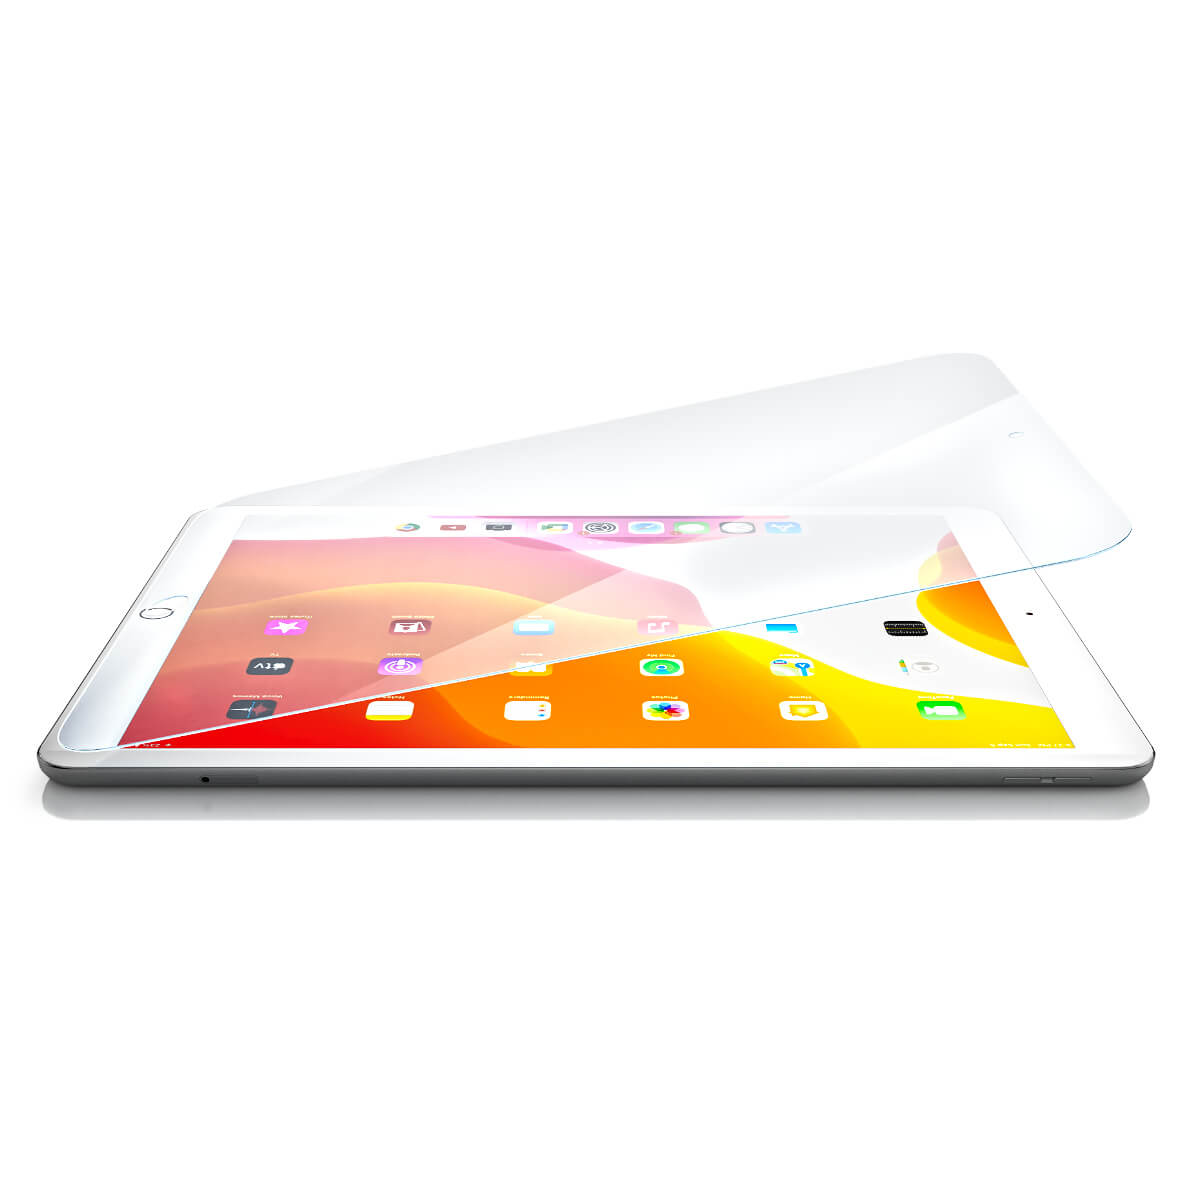 2x iPad 10.5 Screen Protector Tempered Glass | Hugmie